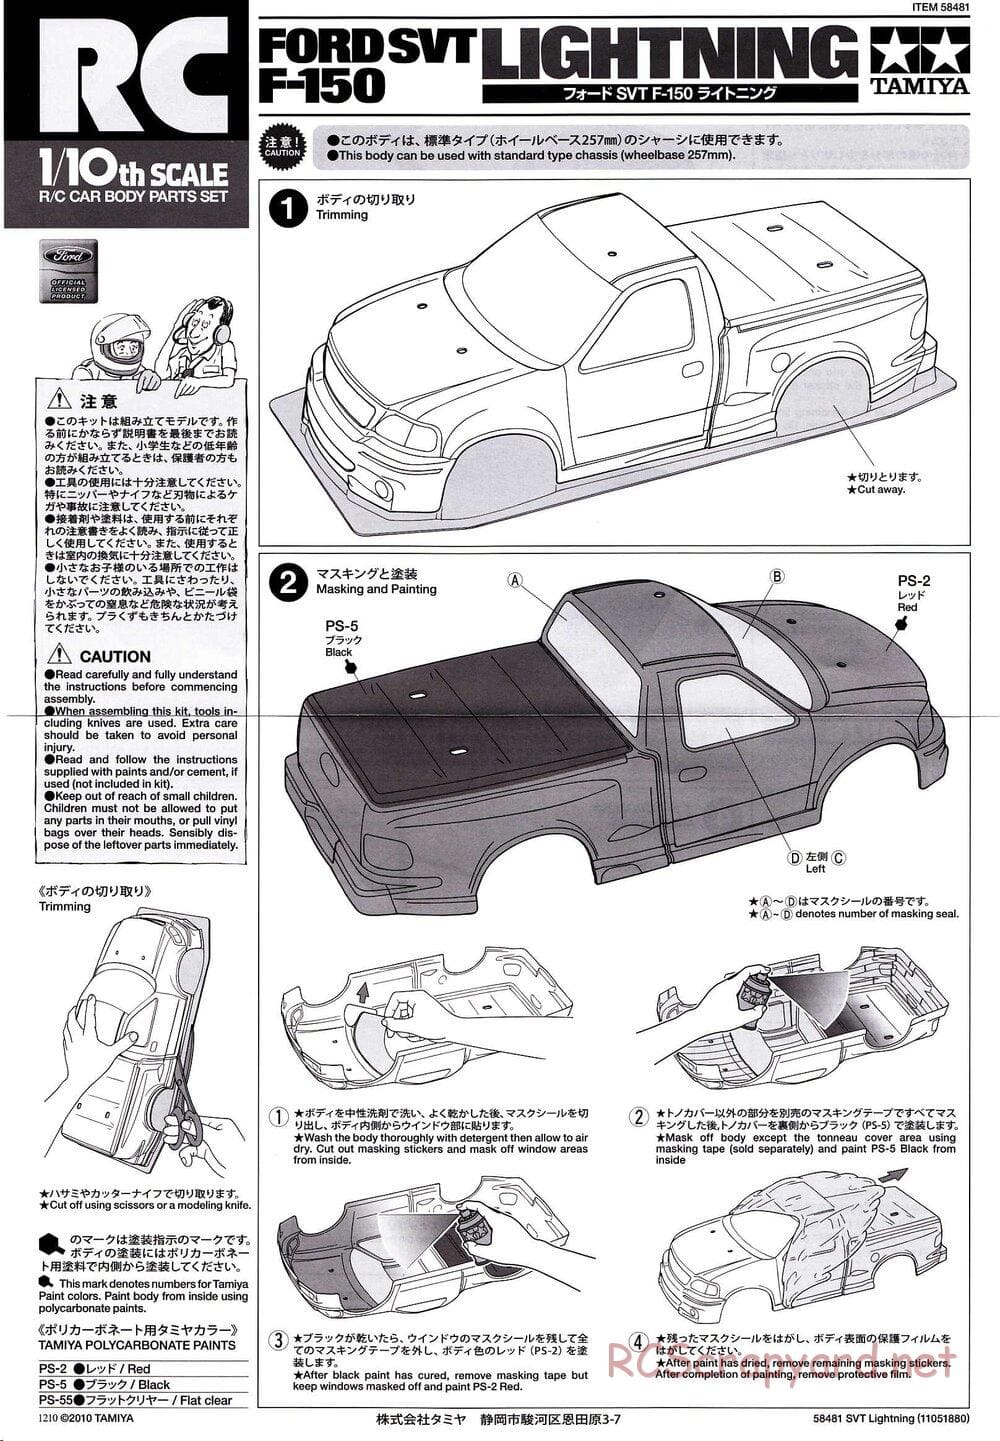 Tamiya - Ford SVT F-150 Lghtning - TT-01E Chassis - Body Manual - Page 1